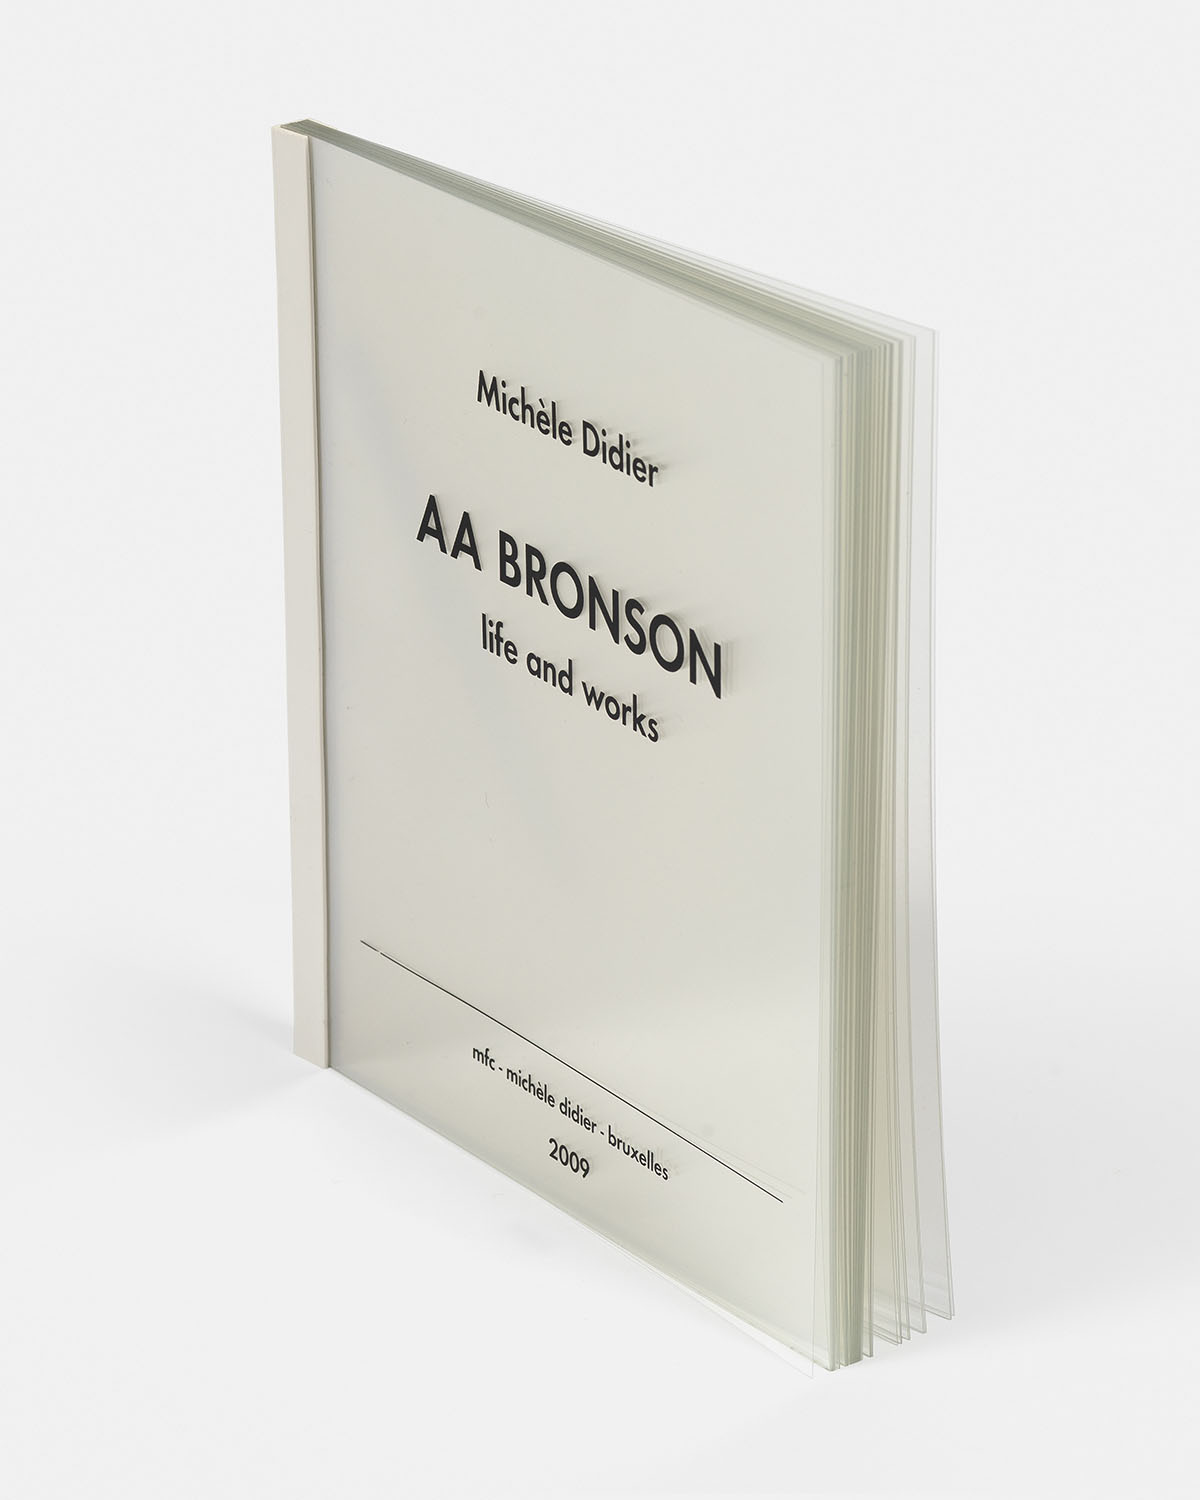 AA Bronson - life and works, 2009 - 